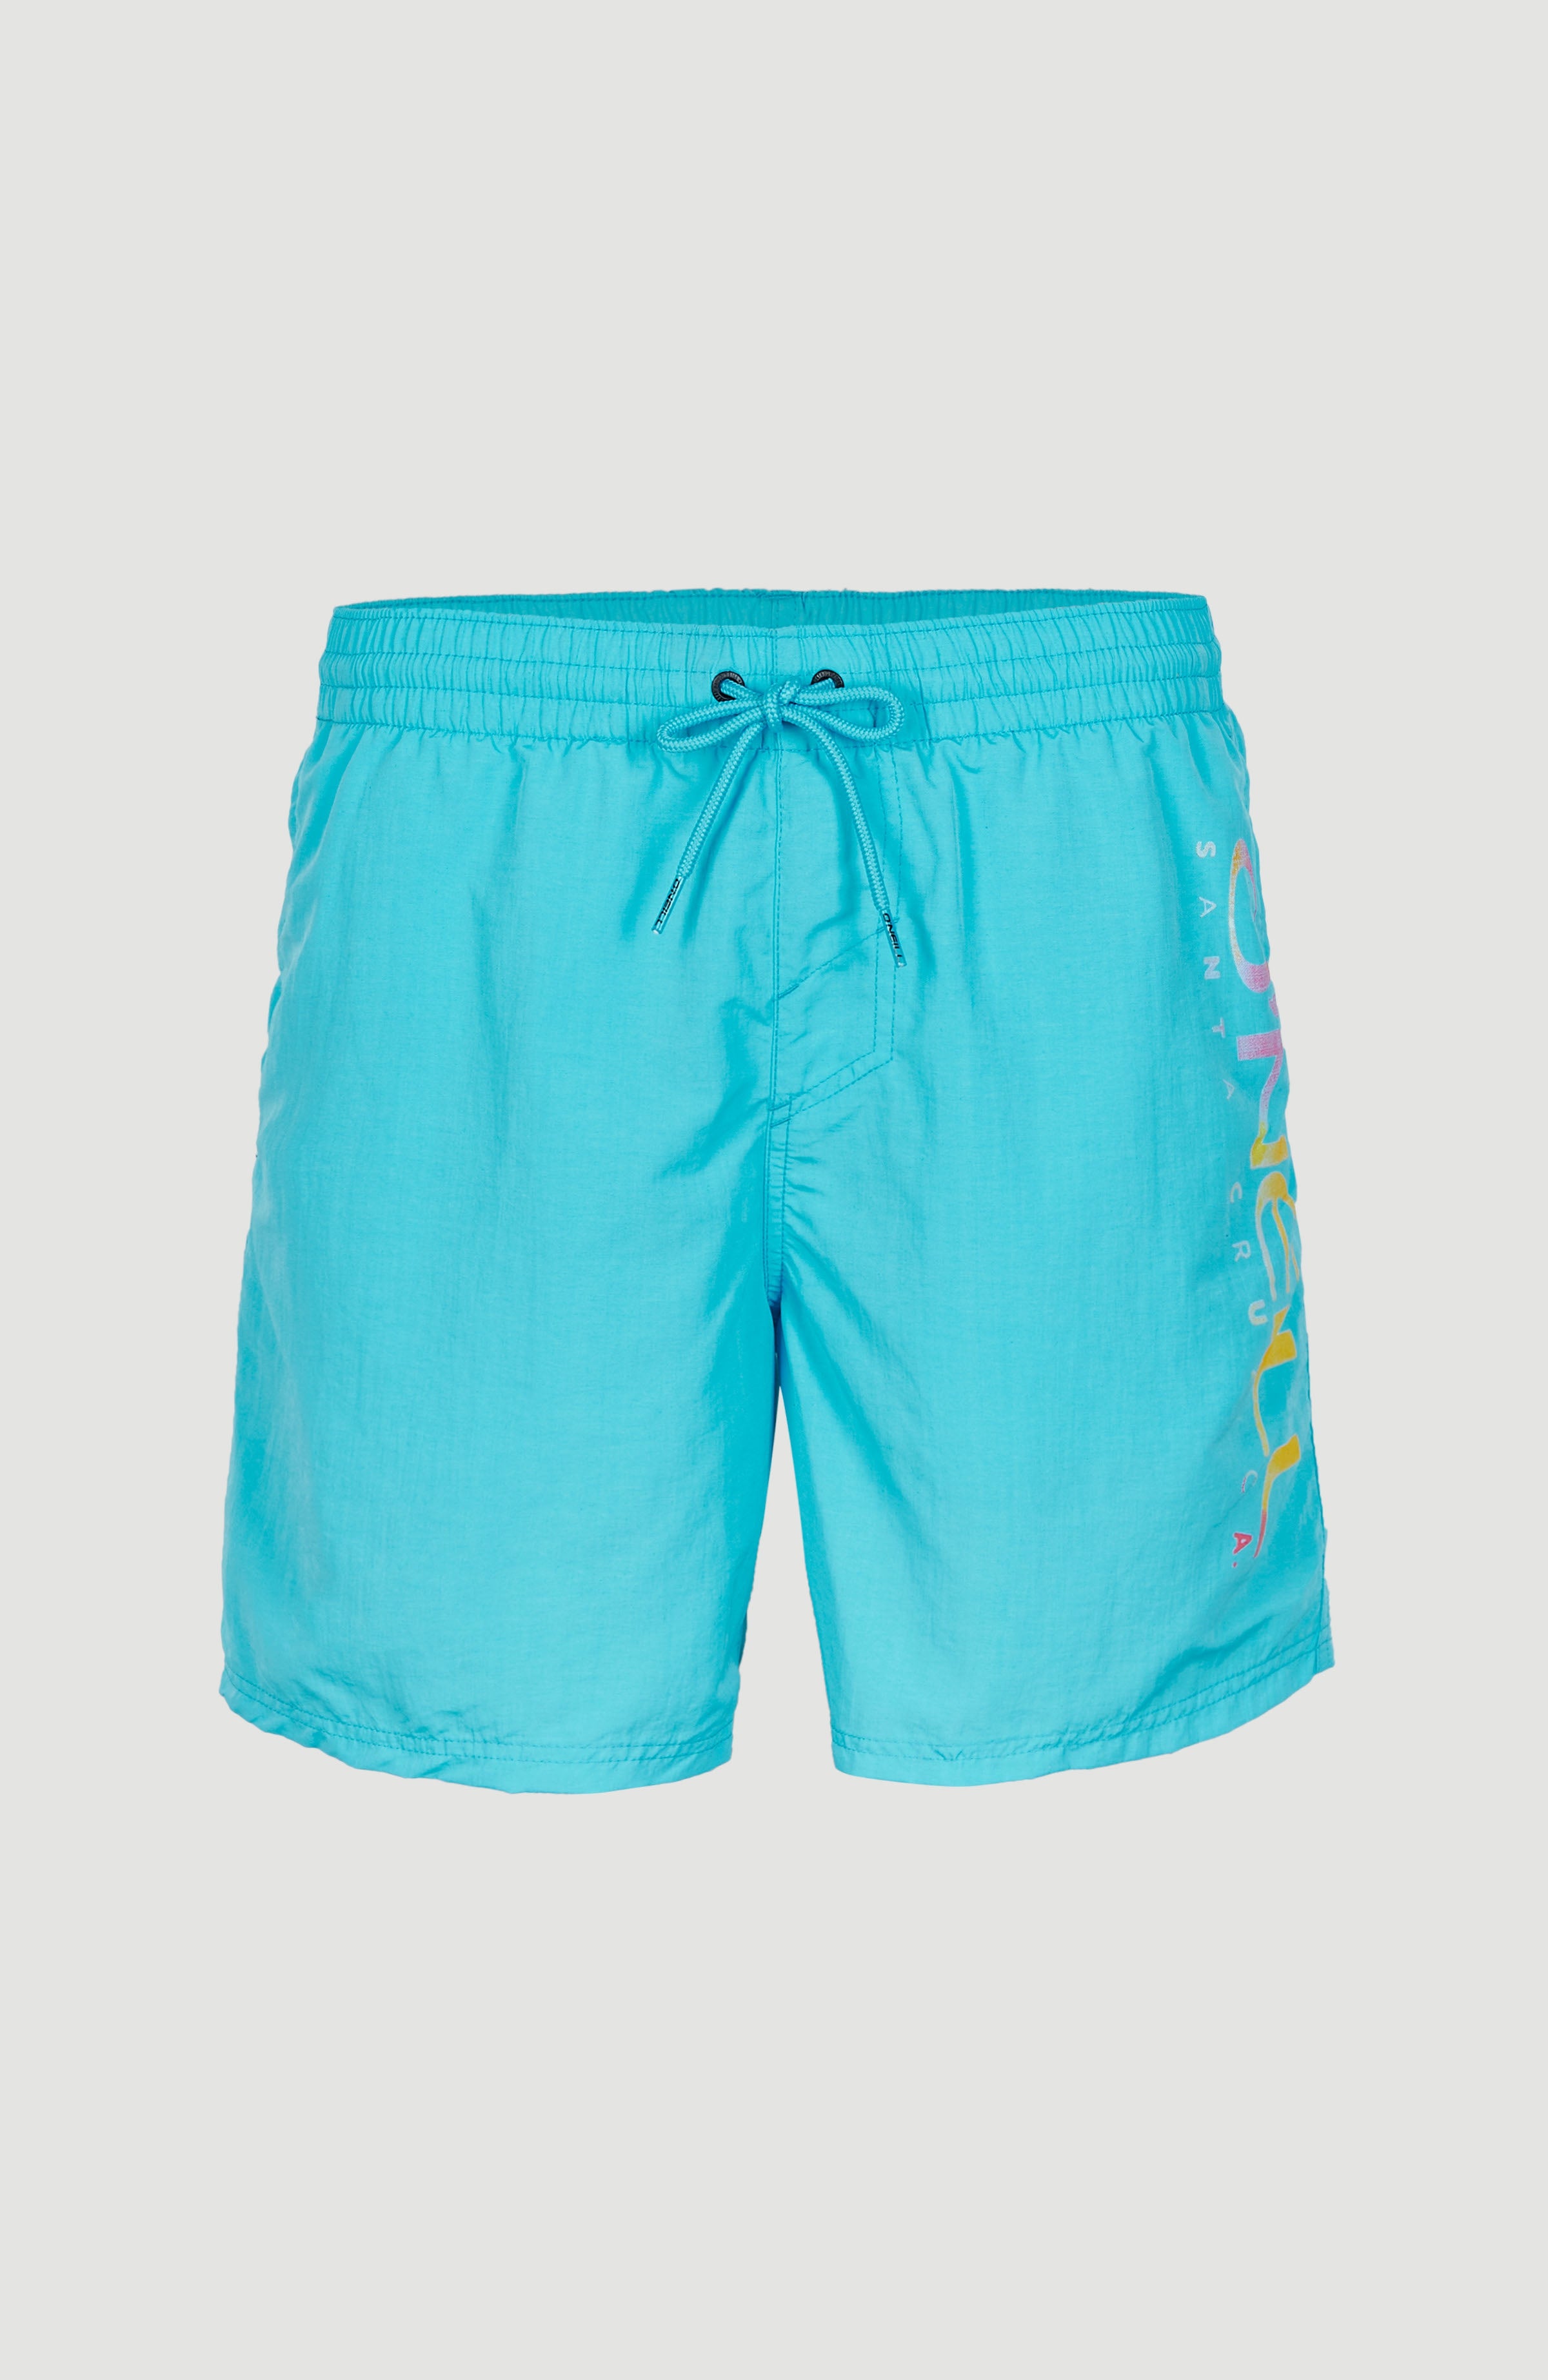 Men's Hawaiian Recycled Swim Shorts in Great Wave Blue Print